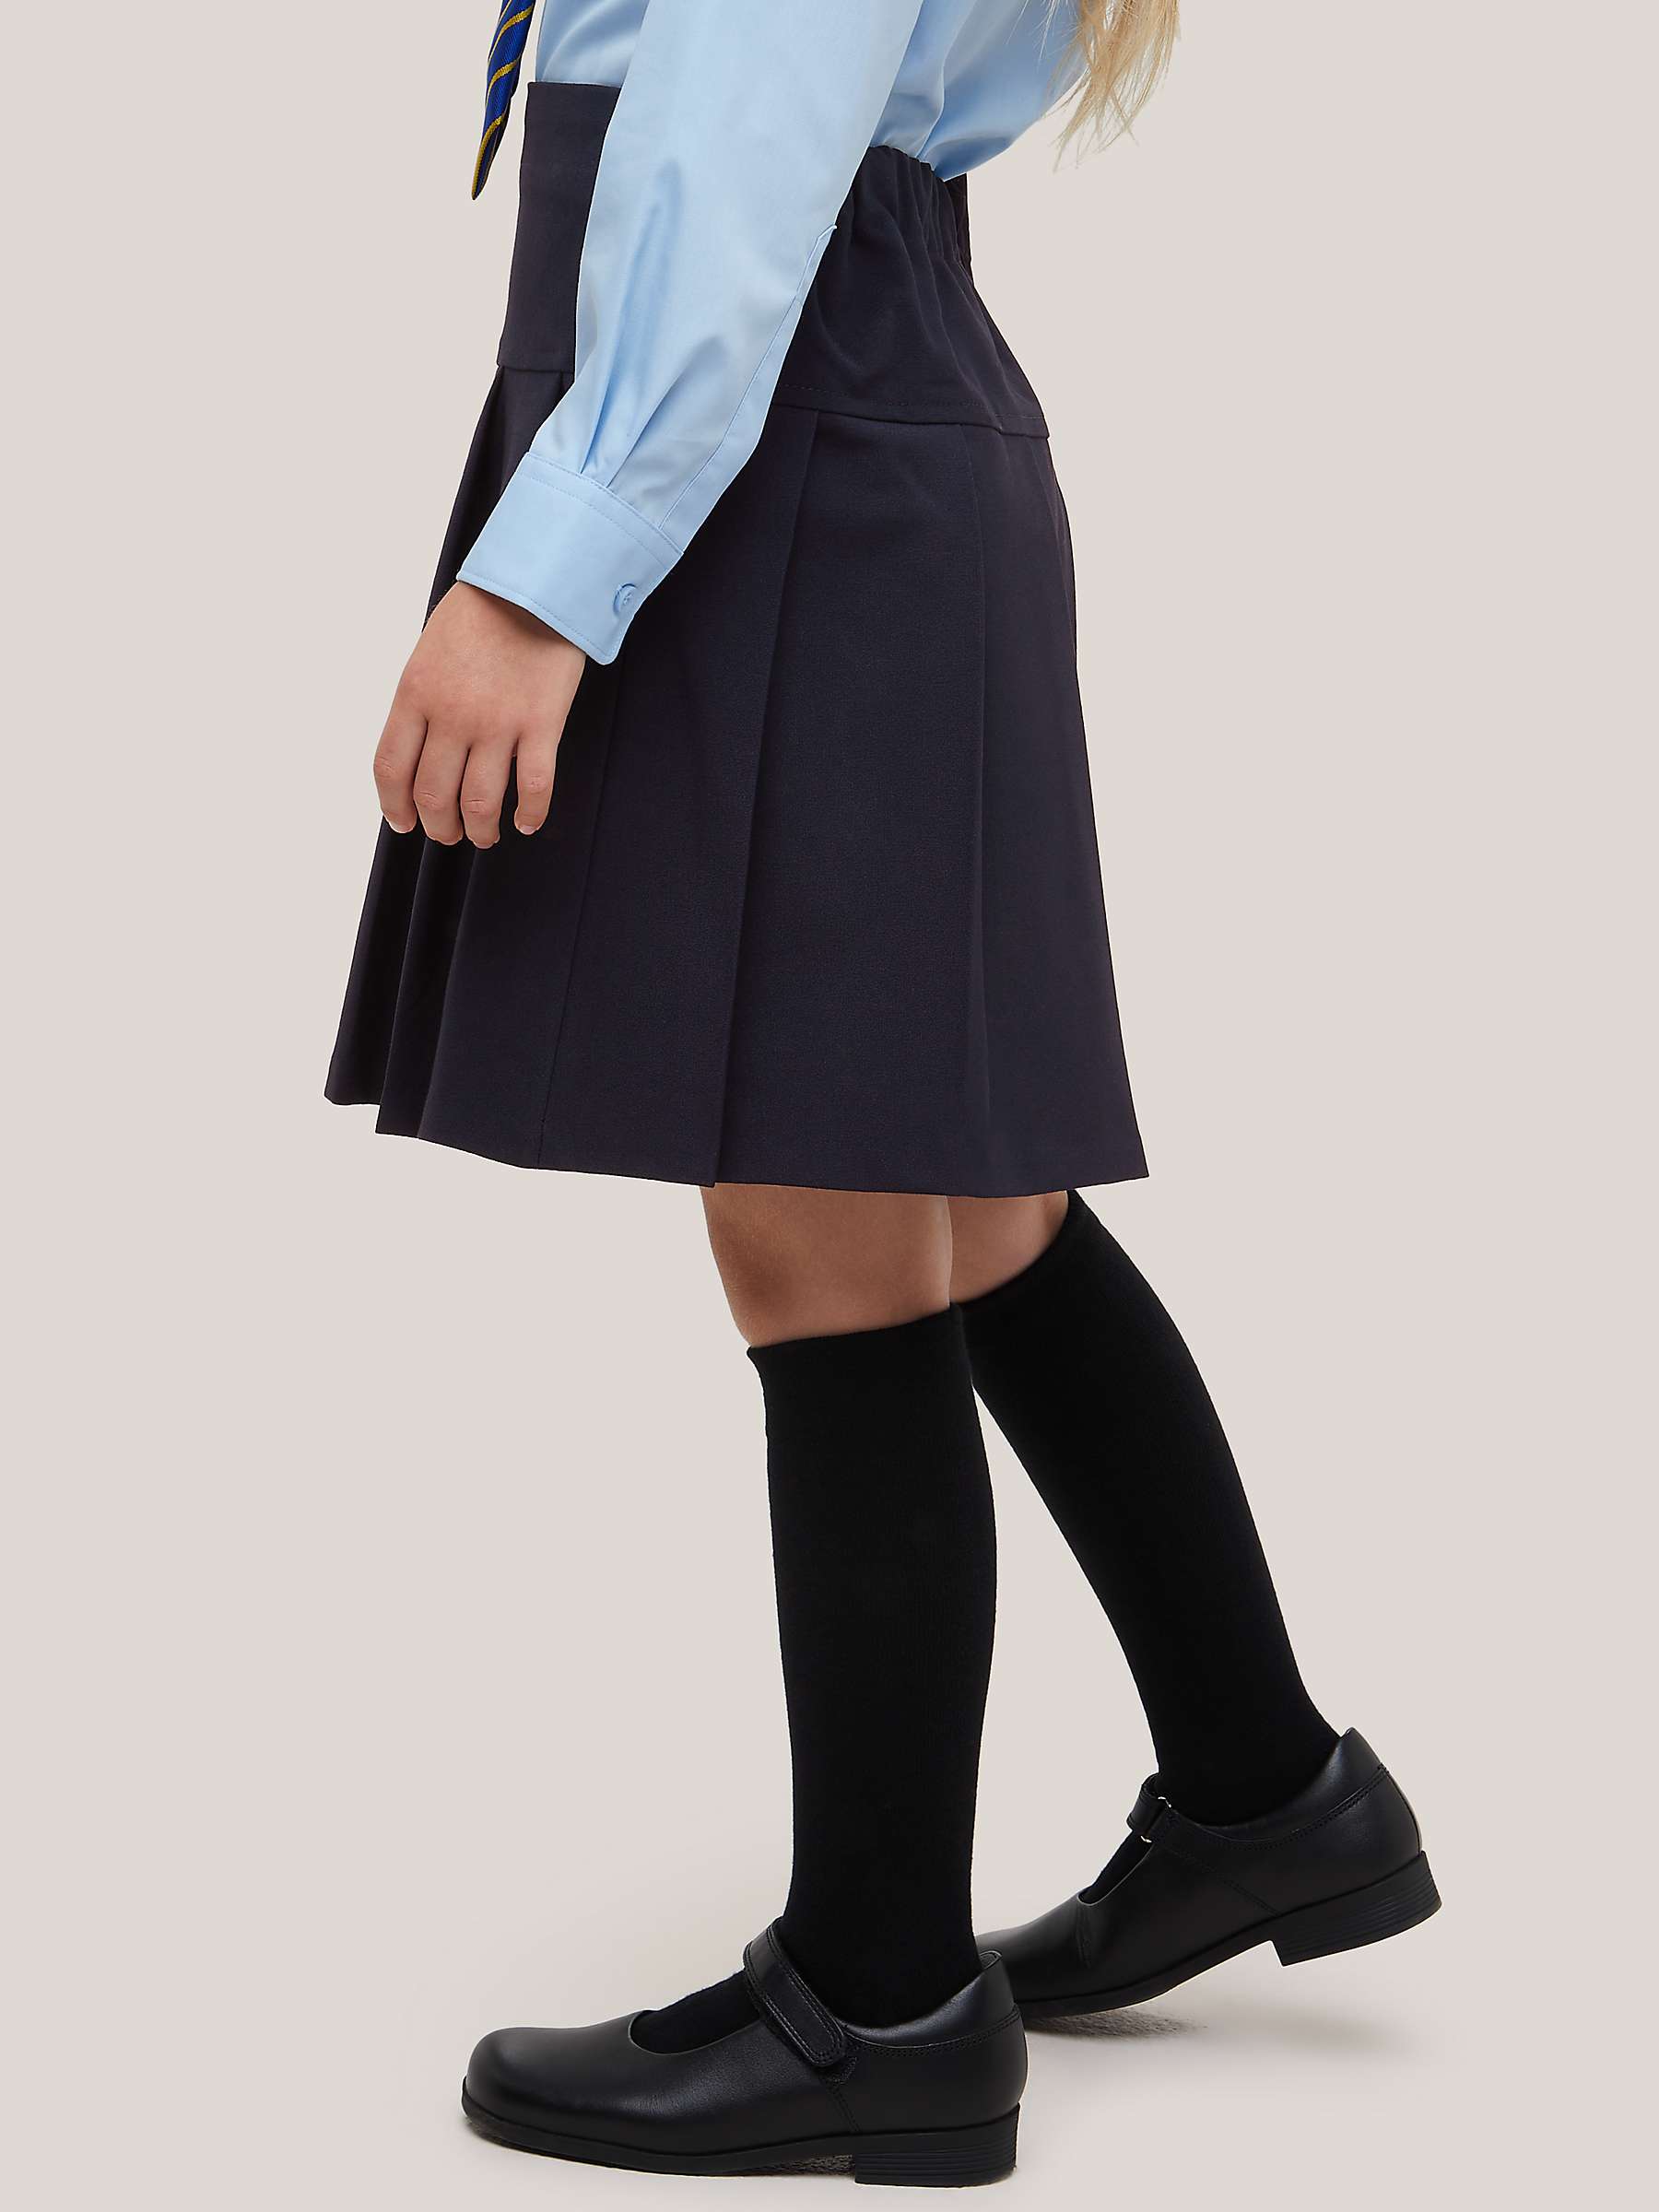 John Lewis  Girls' Adjustable Waist A-Line School Skirt 13ys Navy 